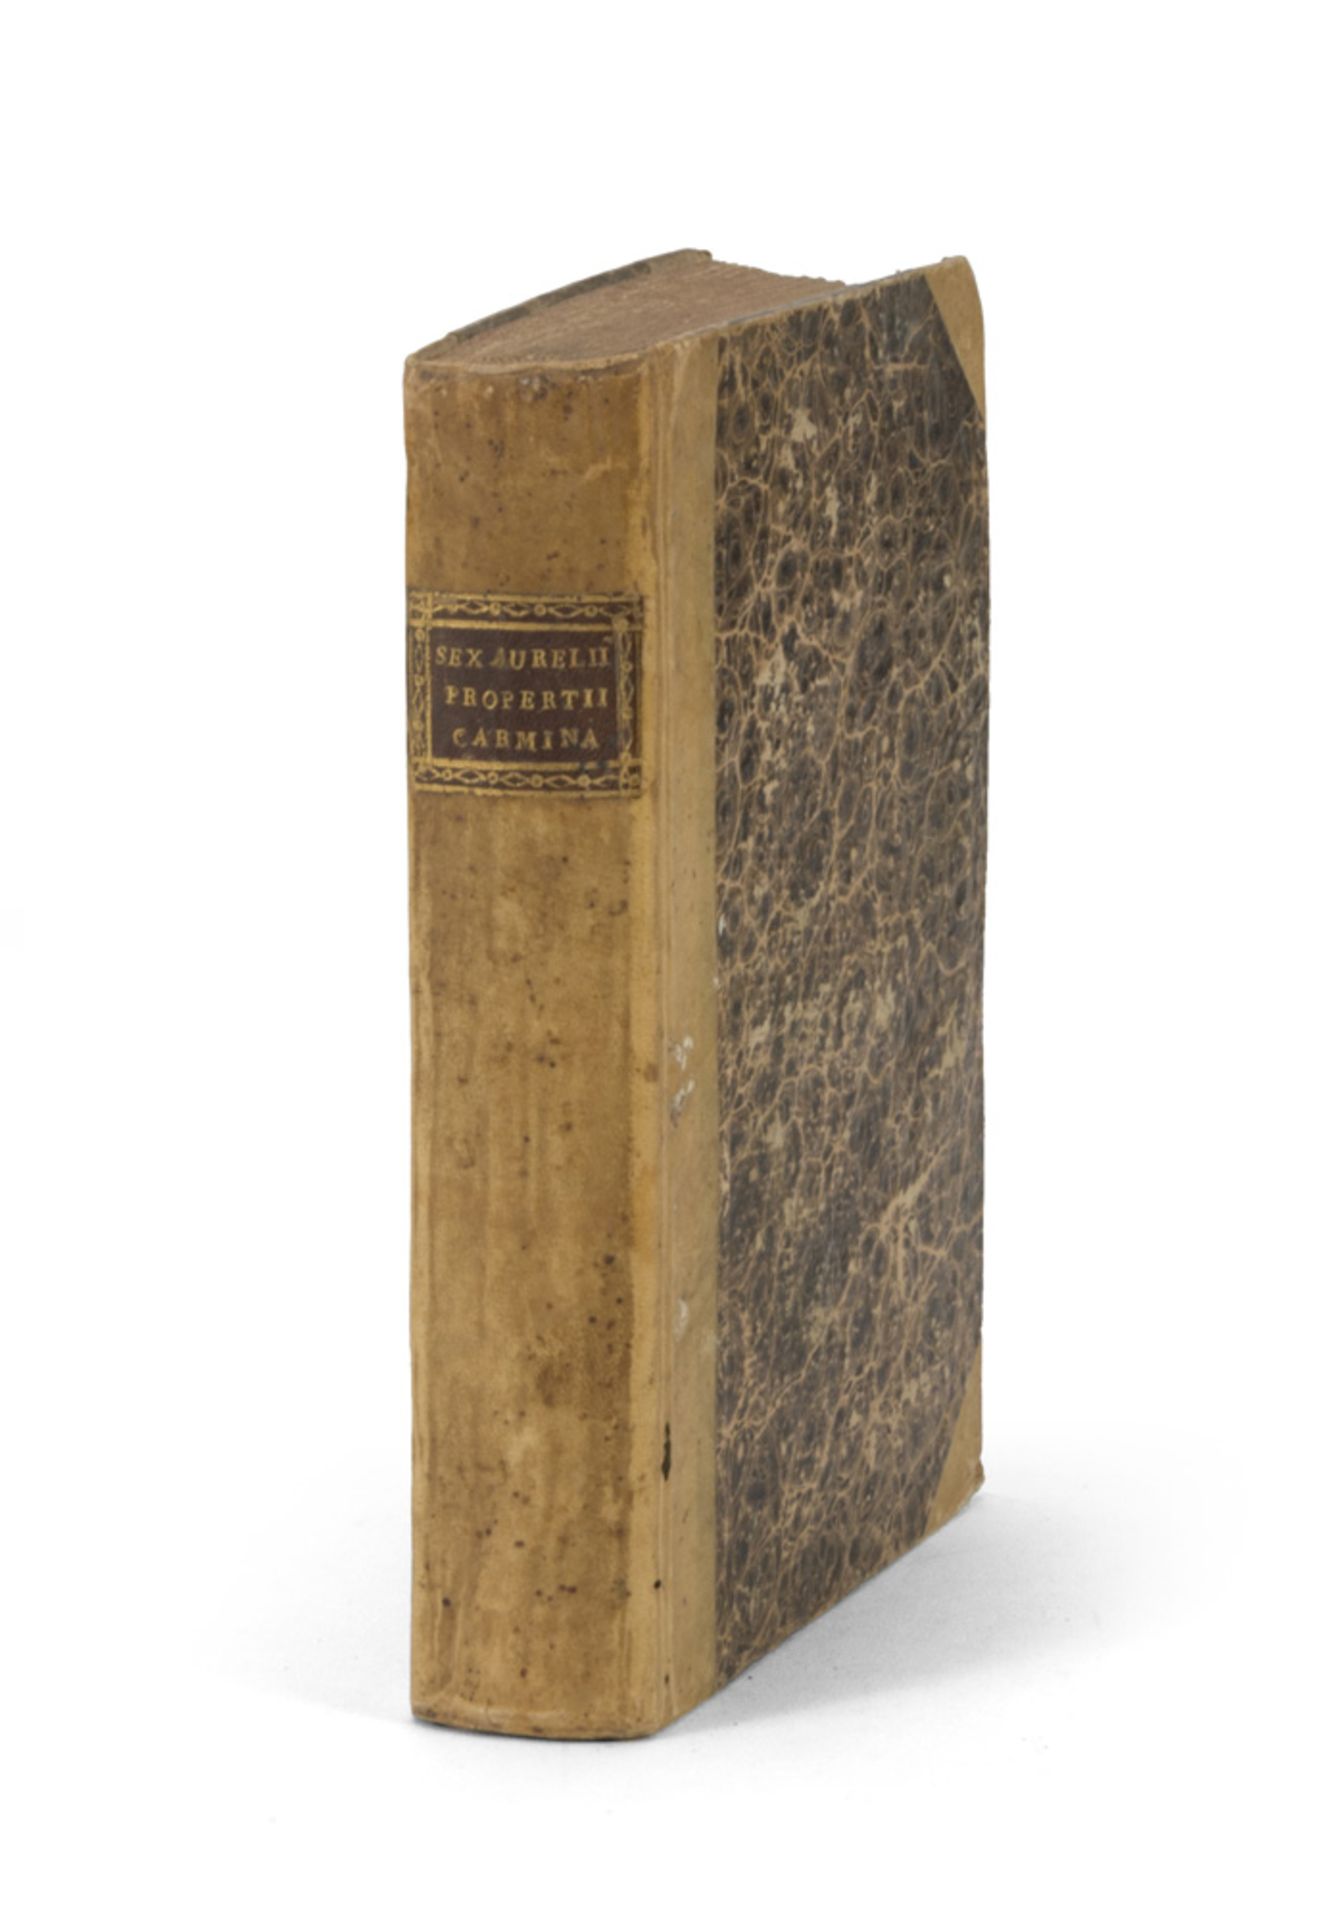 VATICAN PROPERTY Propertii Urbii et Carmina. A volume. Ed. 1791. Half parchment. PROPRIETÀ